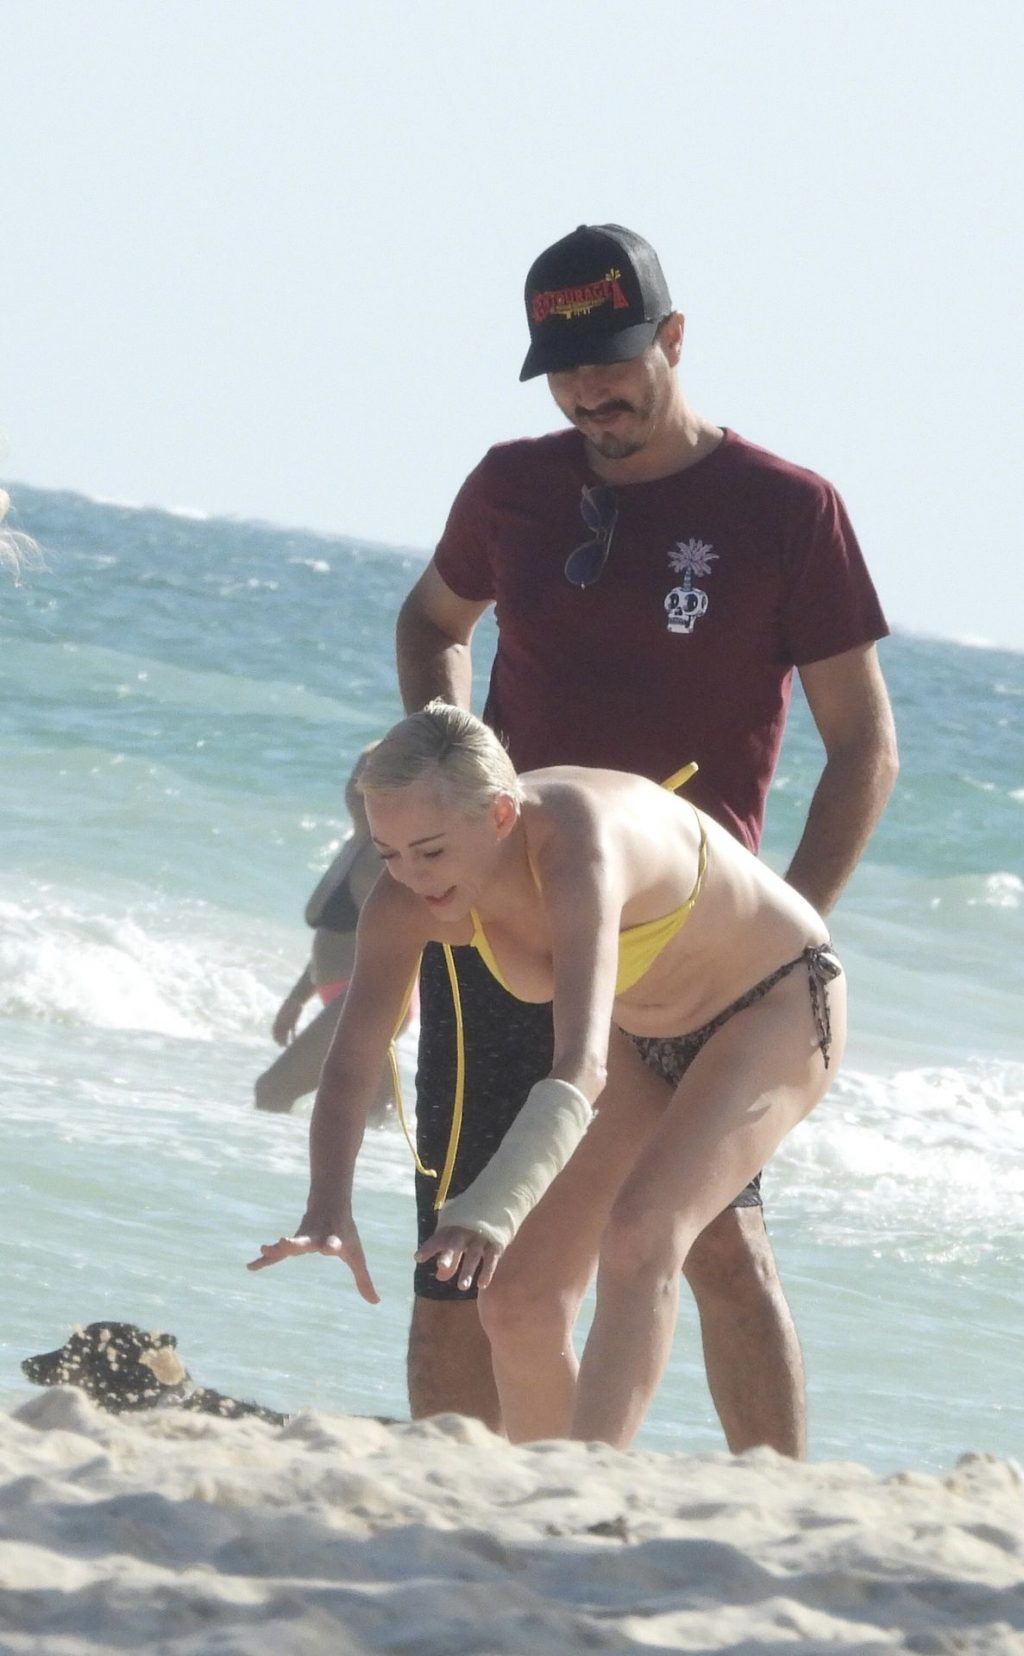 Rose McGowan Hits the Beach in Mexico (55 Photos)